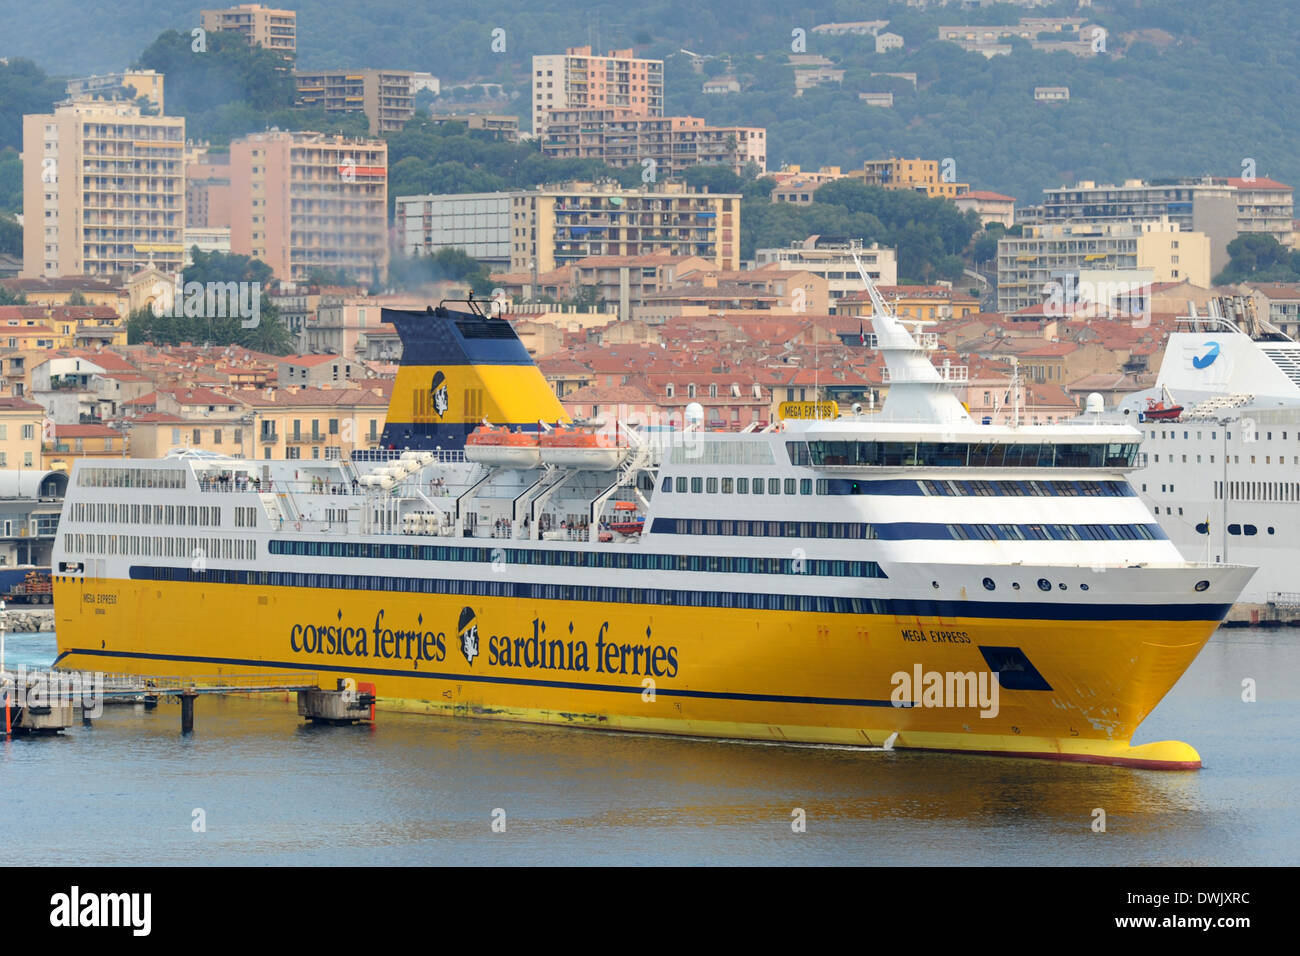 Corsica and Sardinia Ferries. Stock Photo